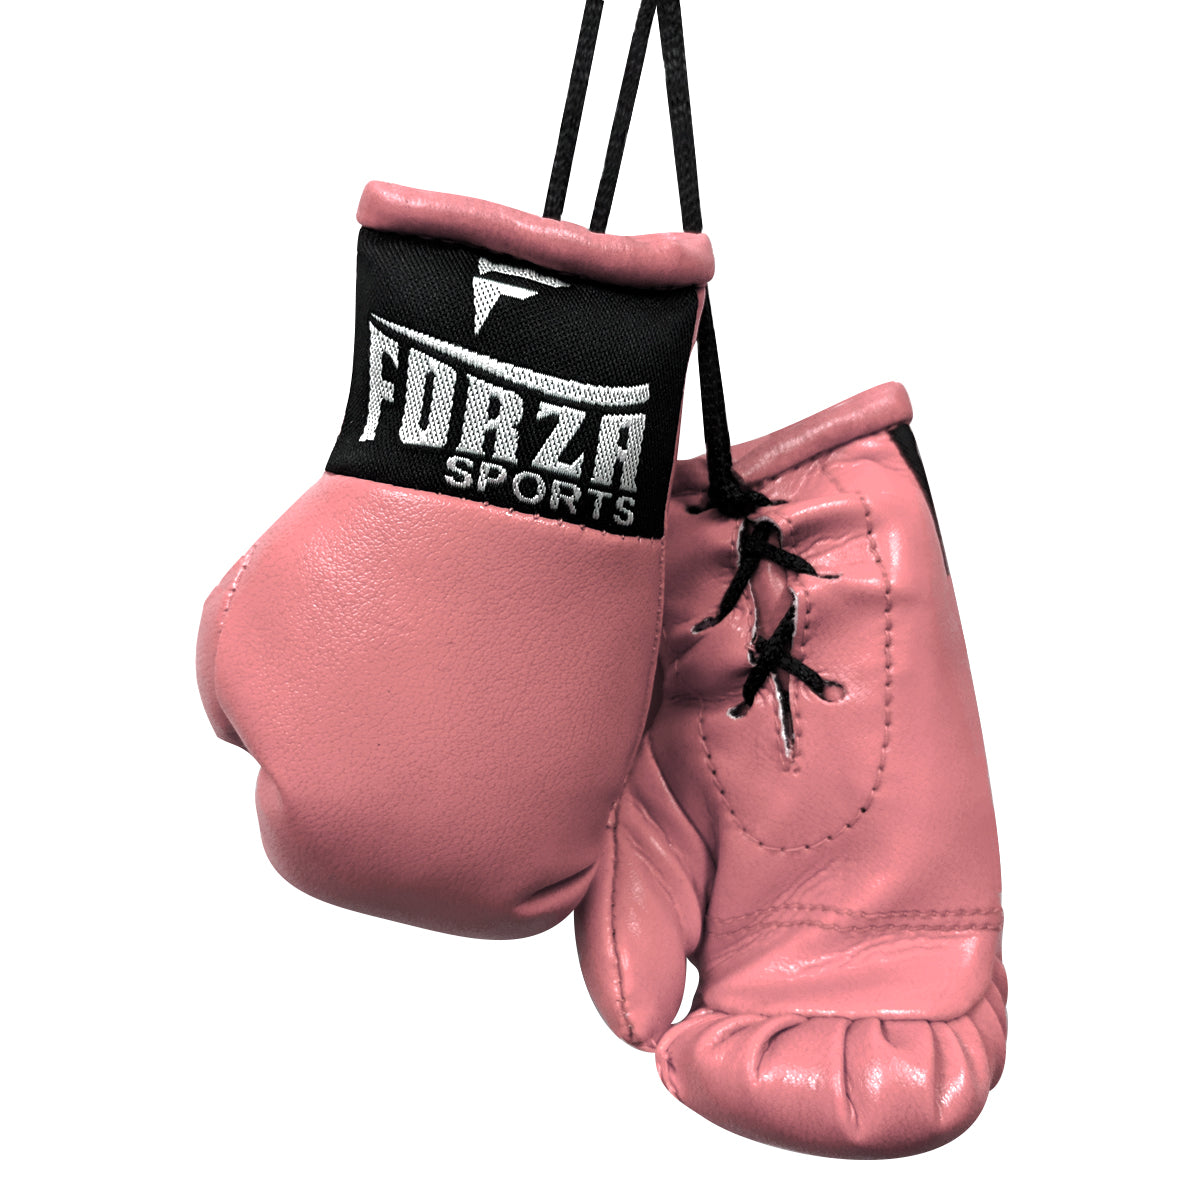 Forza Sports Mini Boxing Gloves Forza Sports